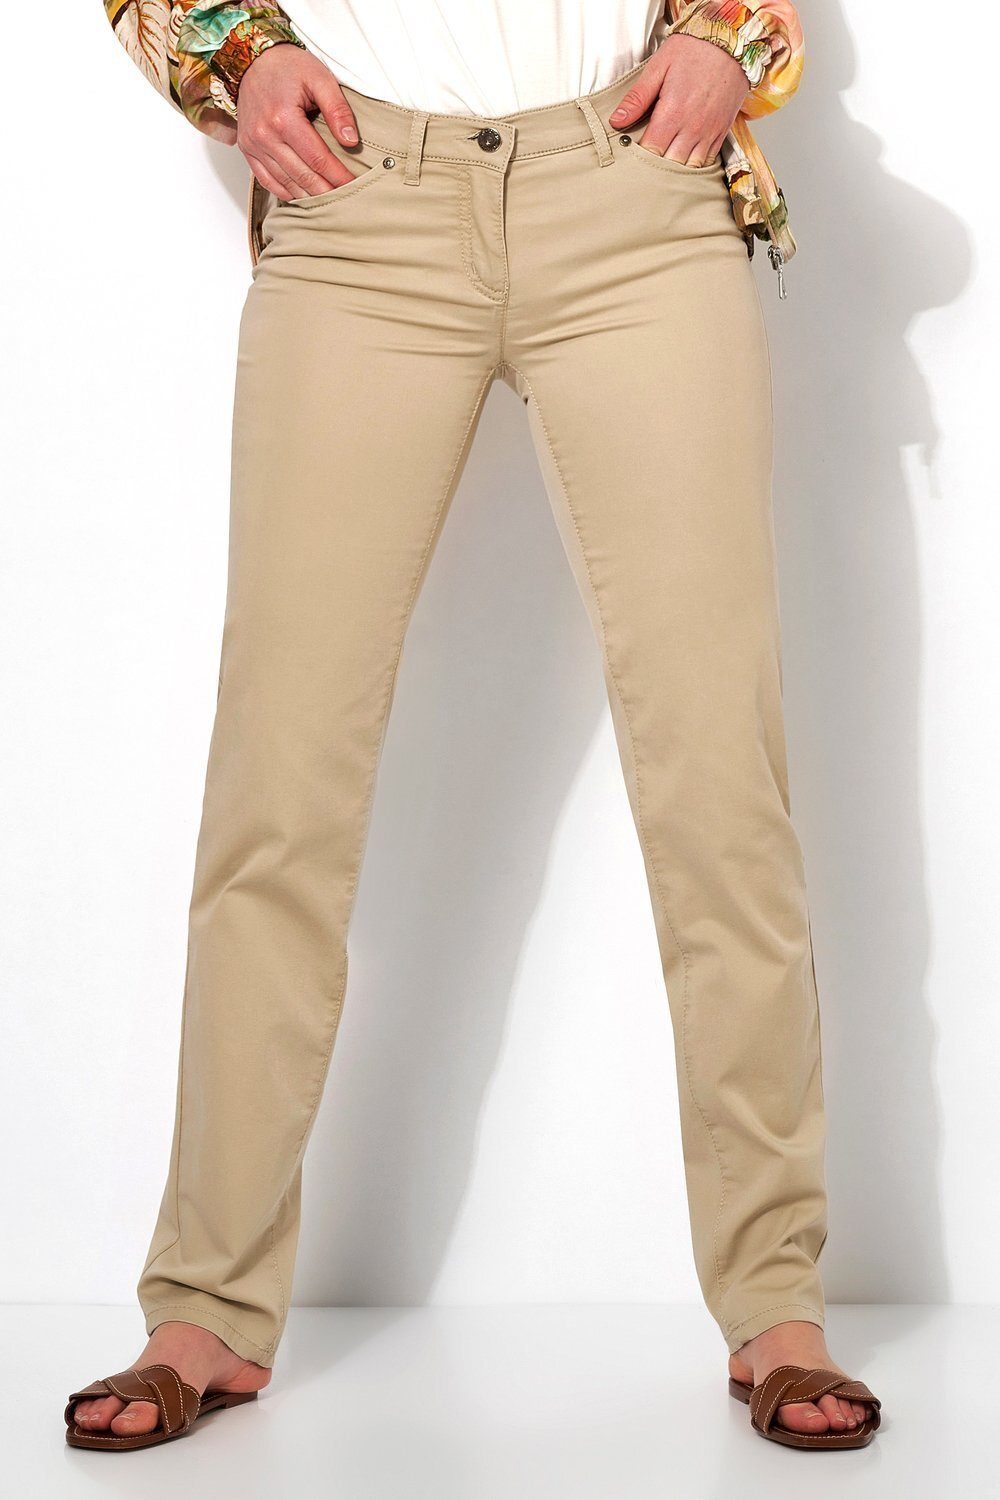 5-Pocket-Hose aus Baumwolle - beige Perfect 072 softer Shape TONI